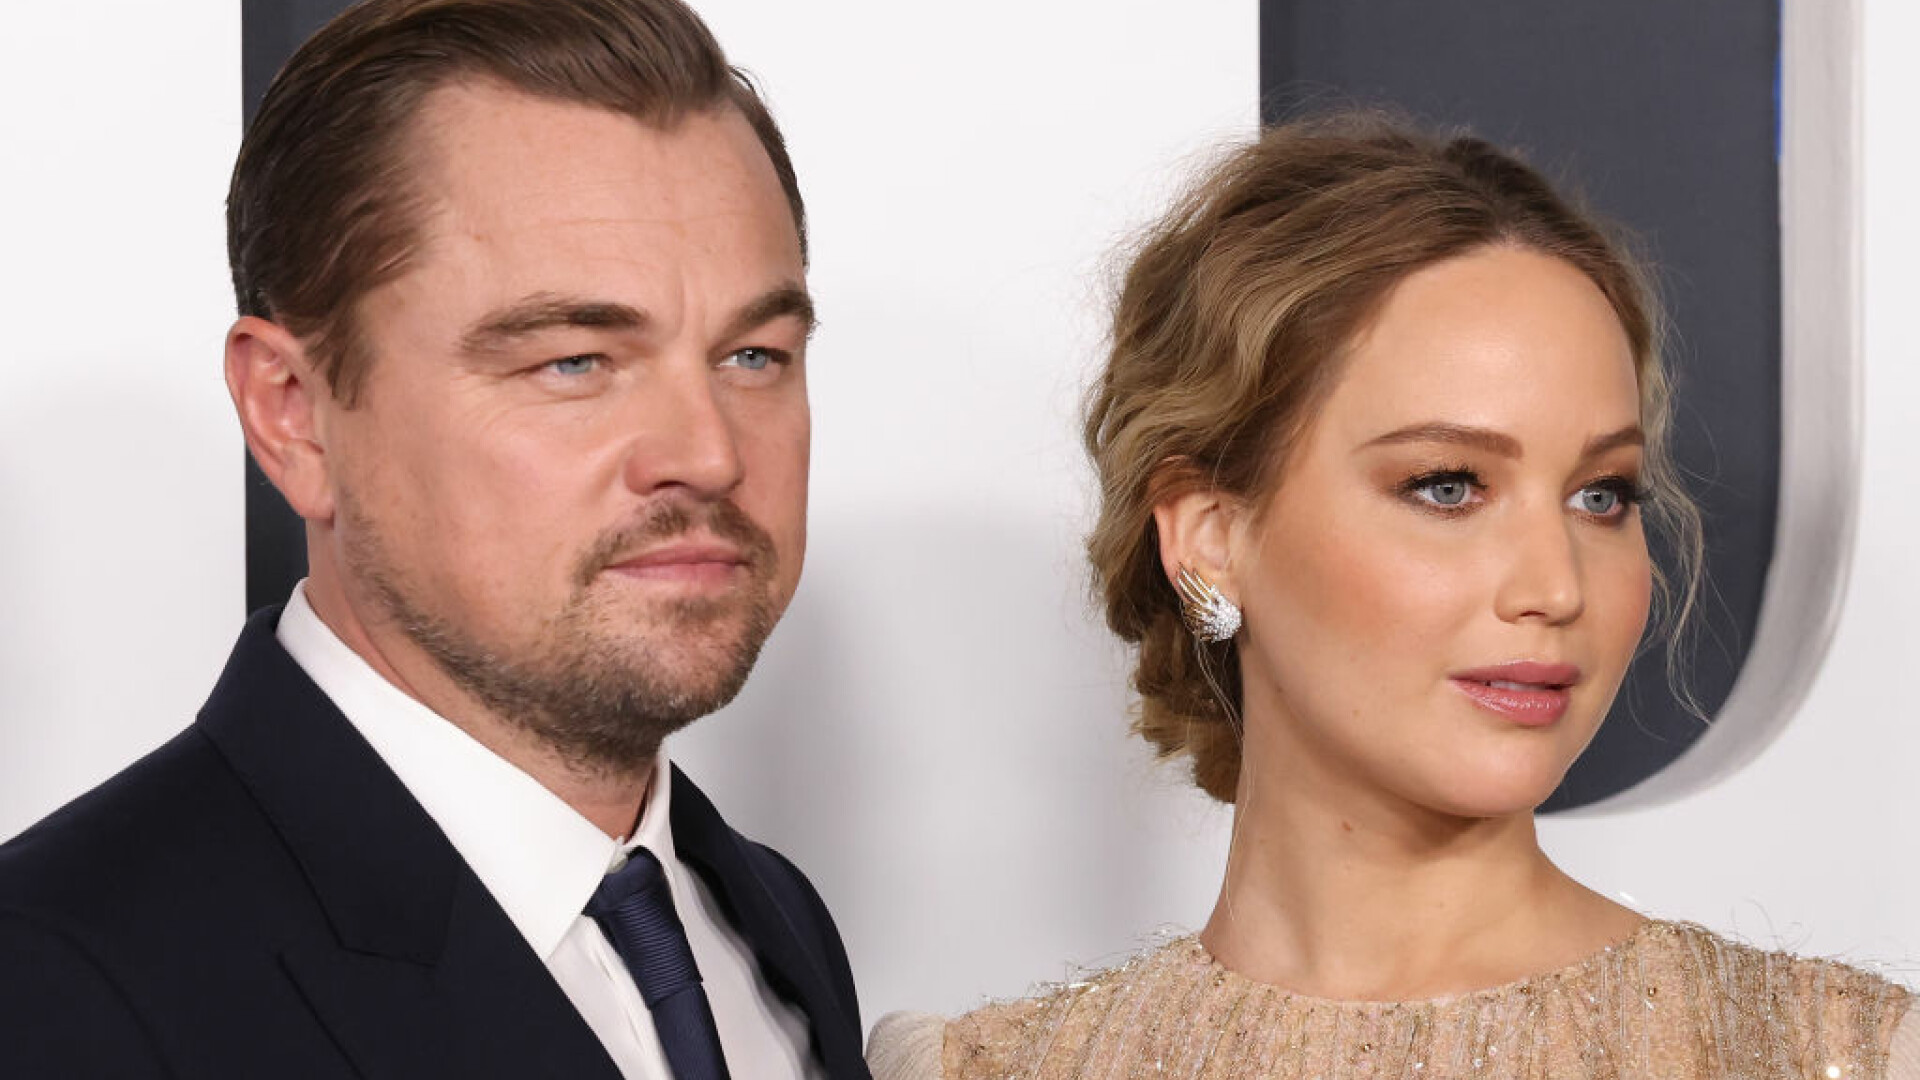 Leonardo DiCaprio și Jennifer Lawrence